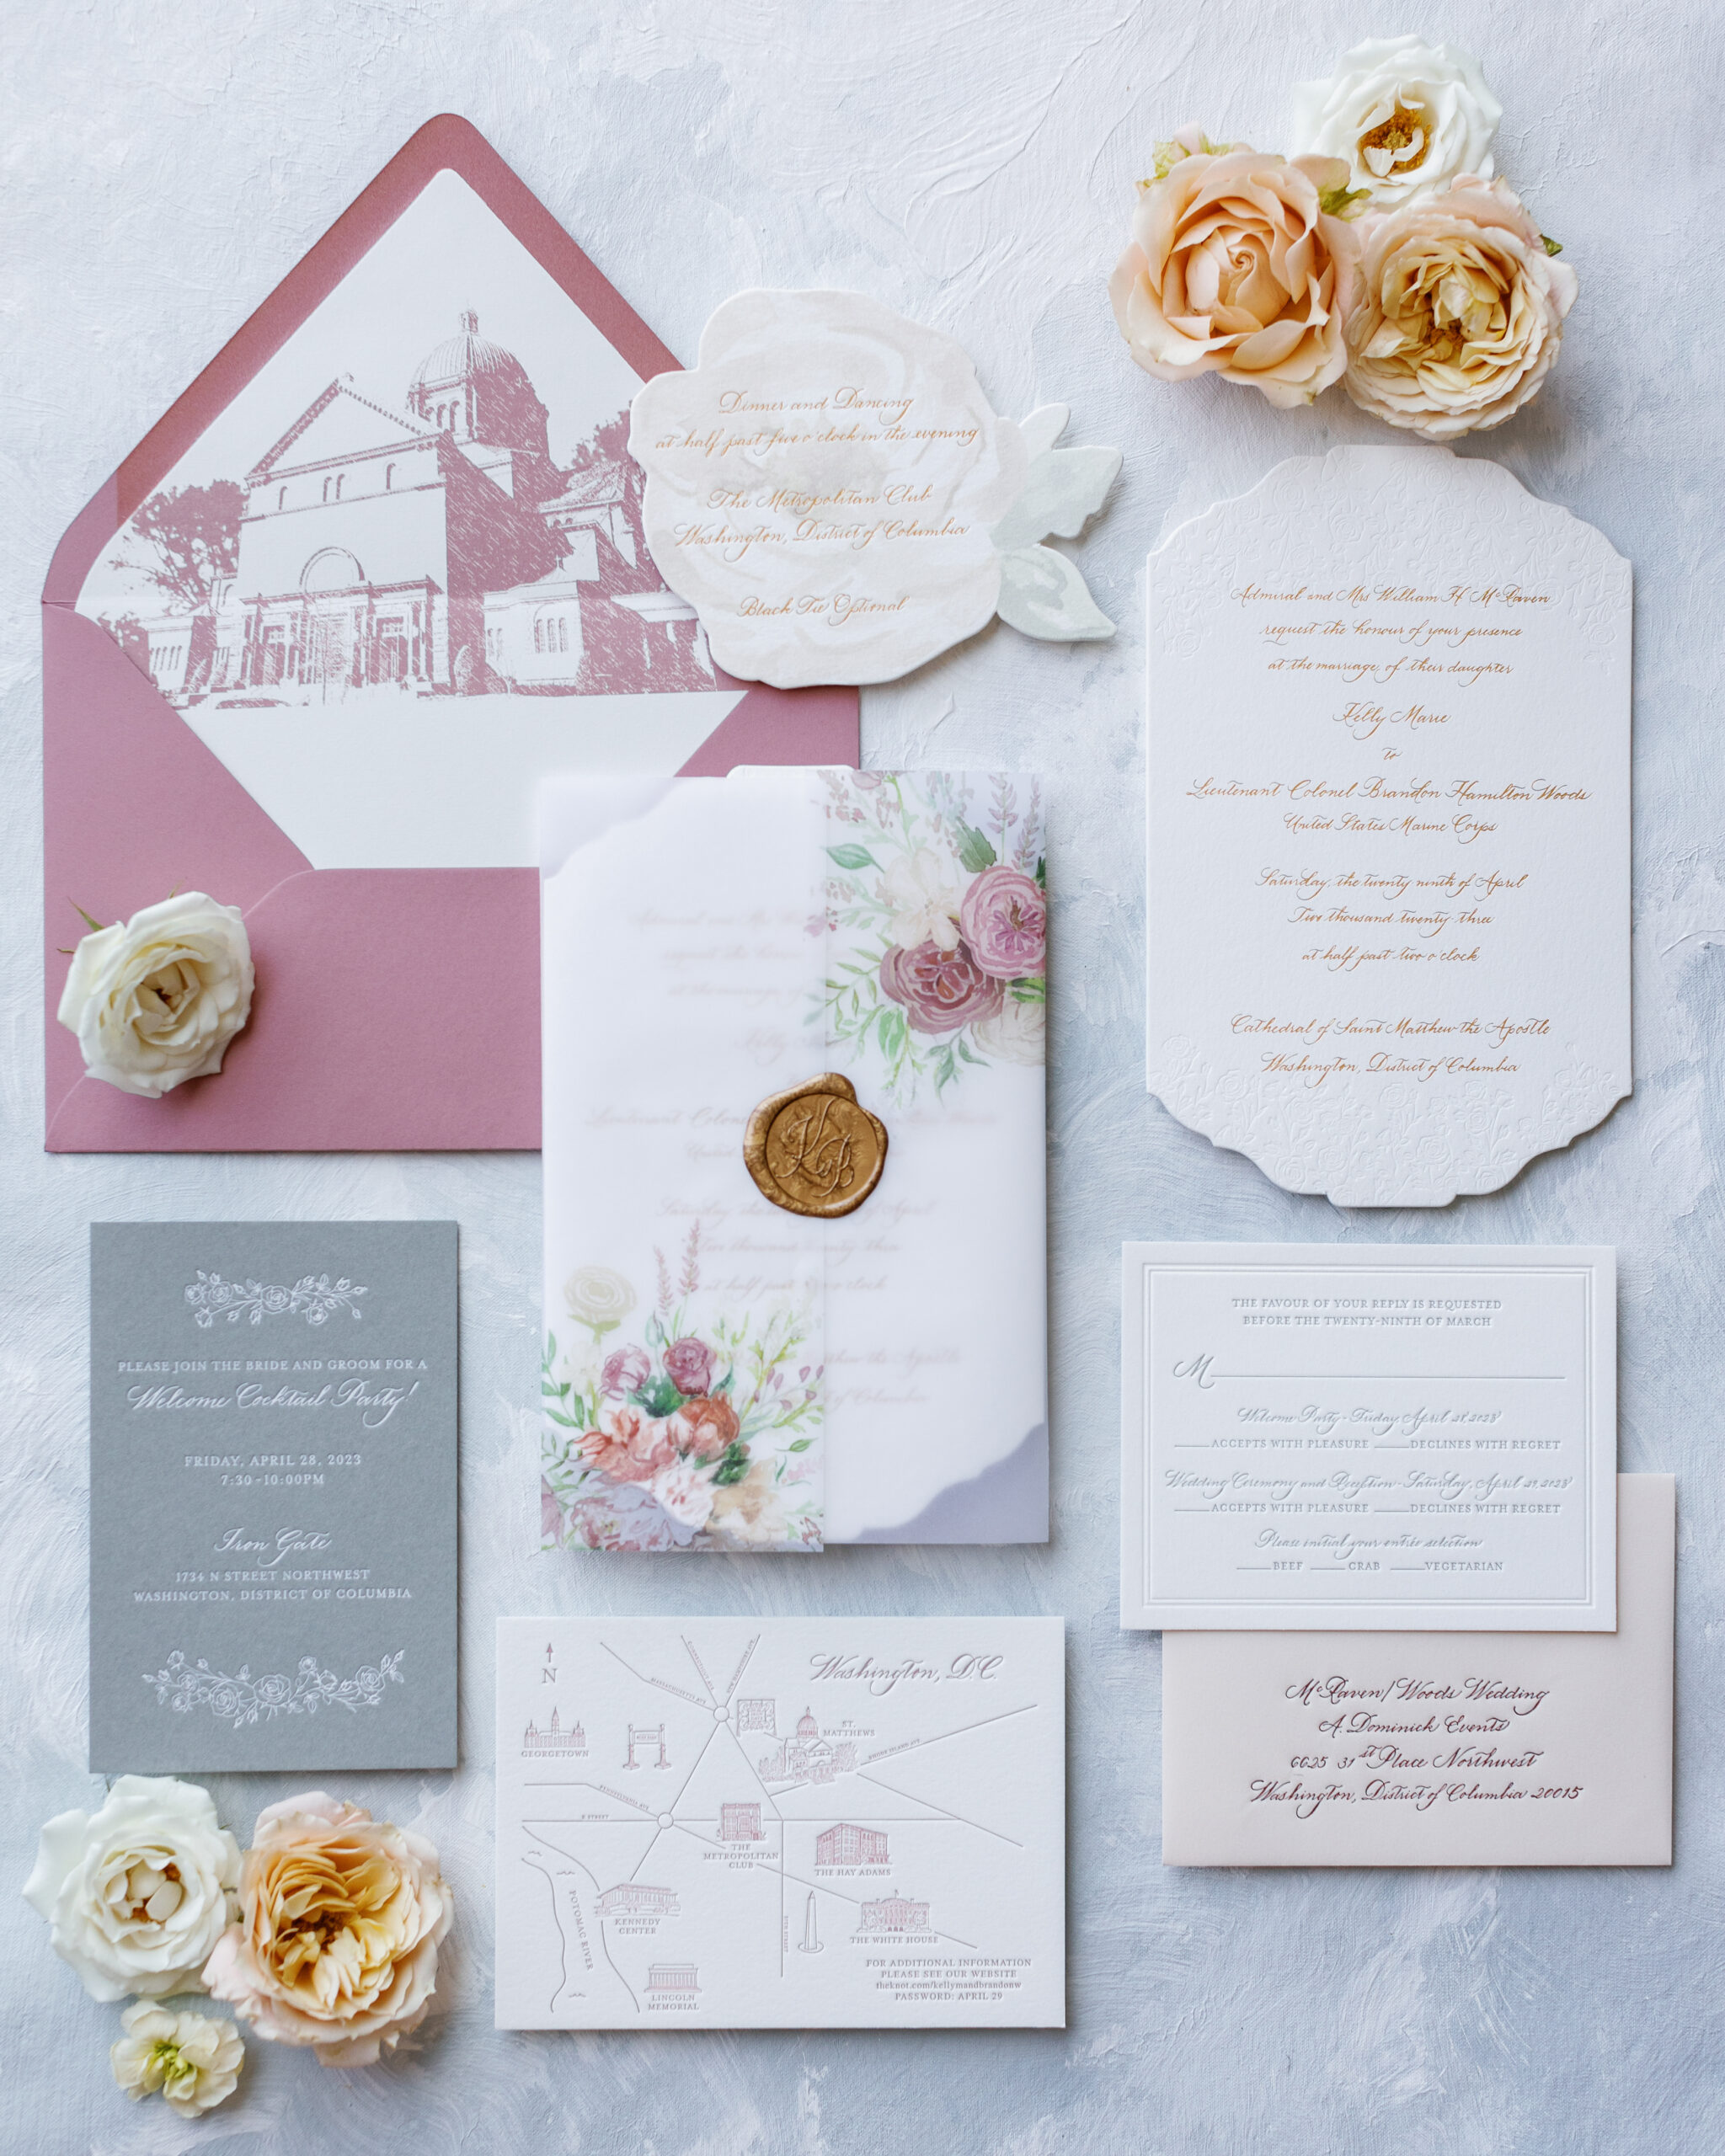 Custom Wedding Invitation Suite by Laura Hooper Design House